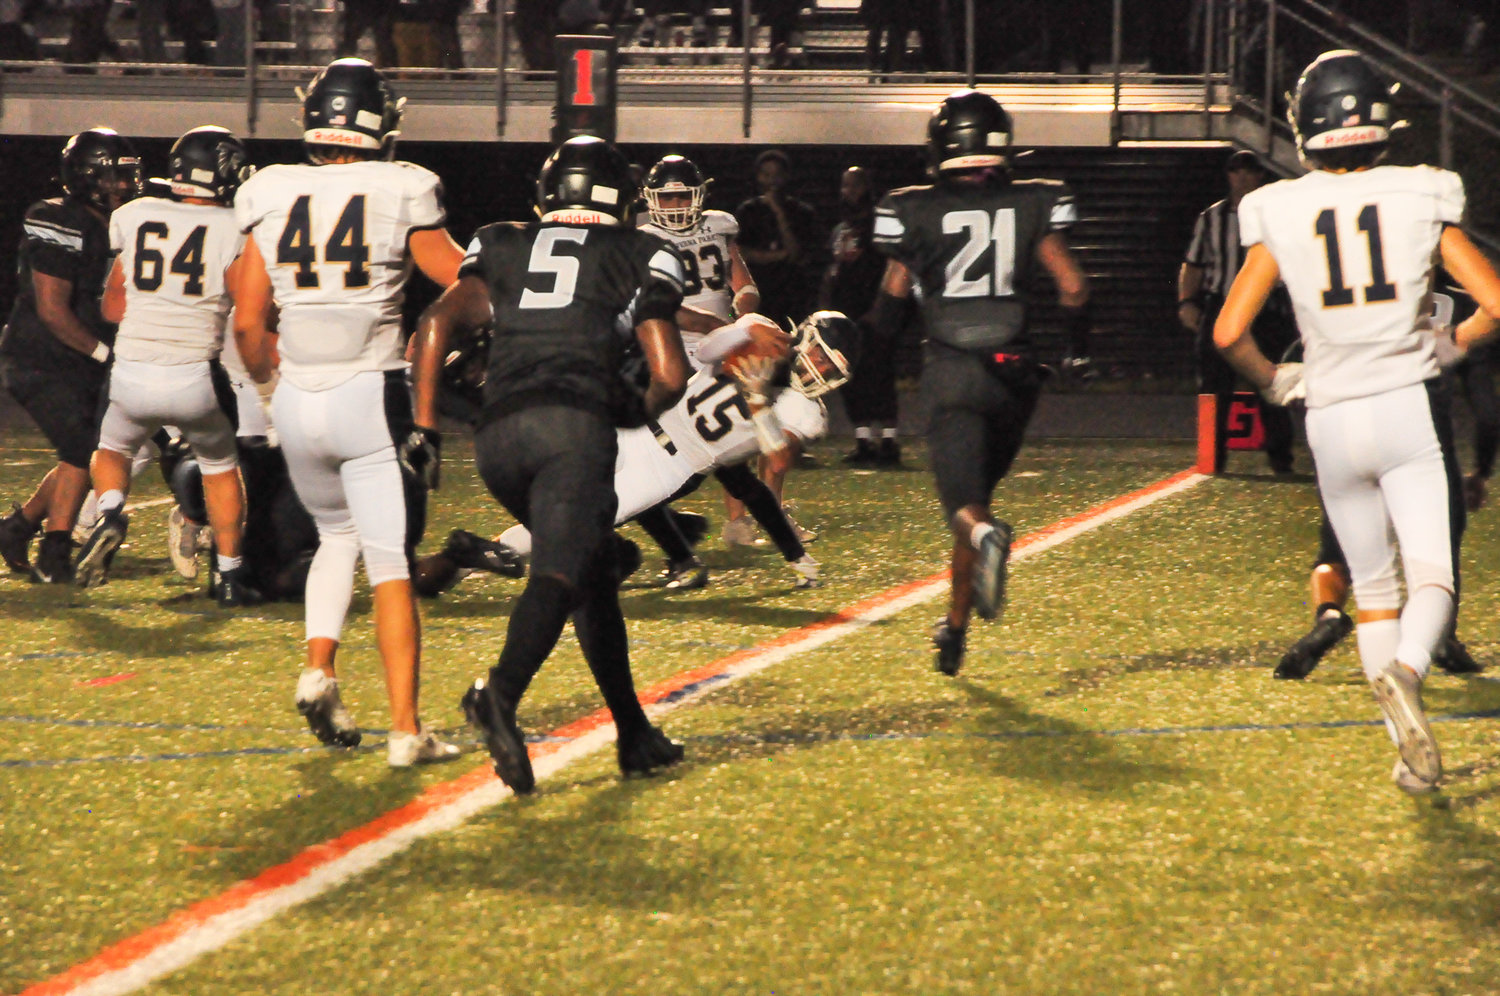 Seamus Patenaude (center) dove into the end zone to score a 5-yard rushing touchdown.